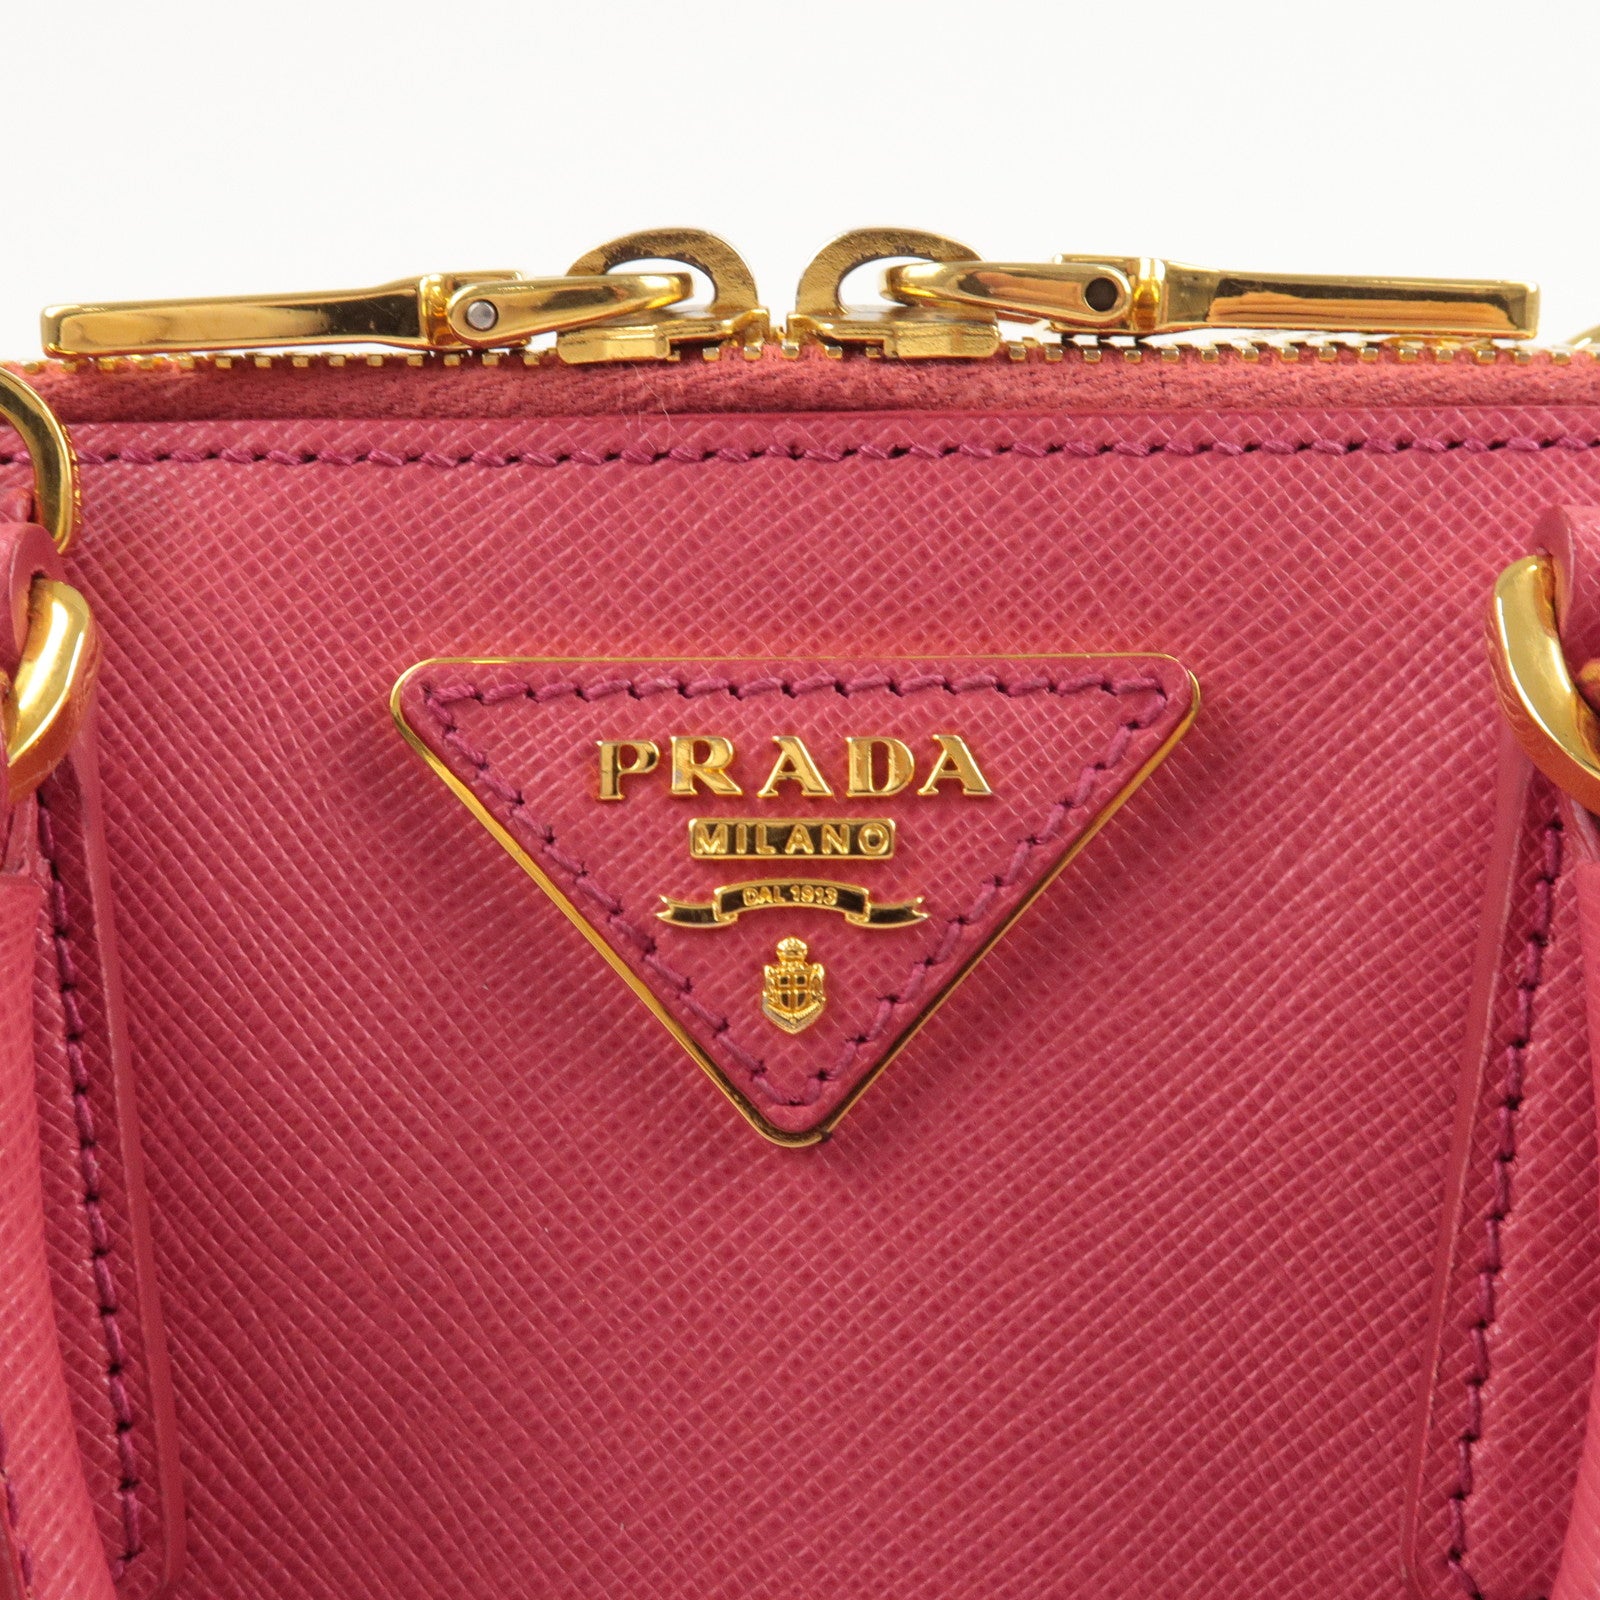 Download Prada Milano Purse Pink Wallpaper | Wallpapers.com